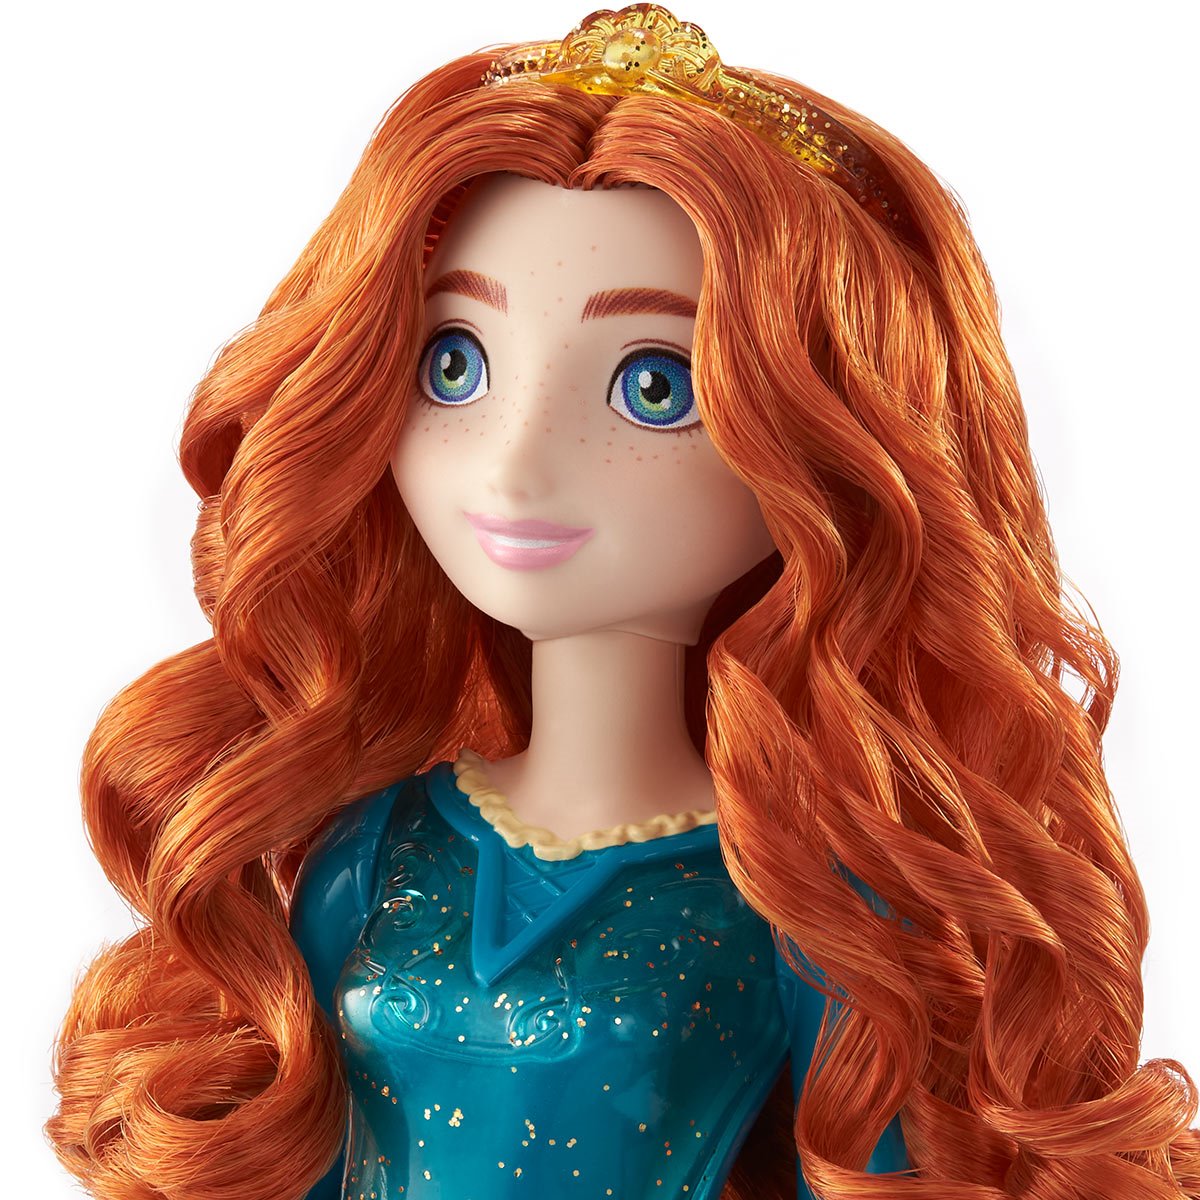 Disney Princess Merida Doll - Entertainment Earth